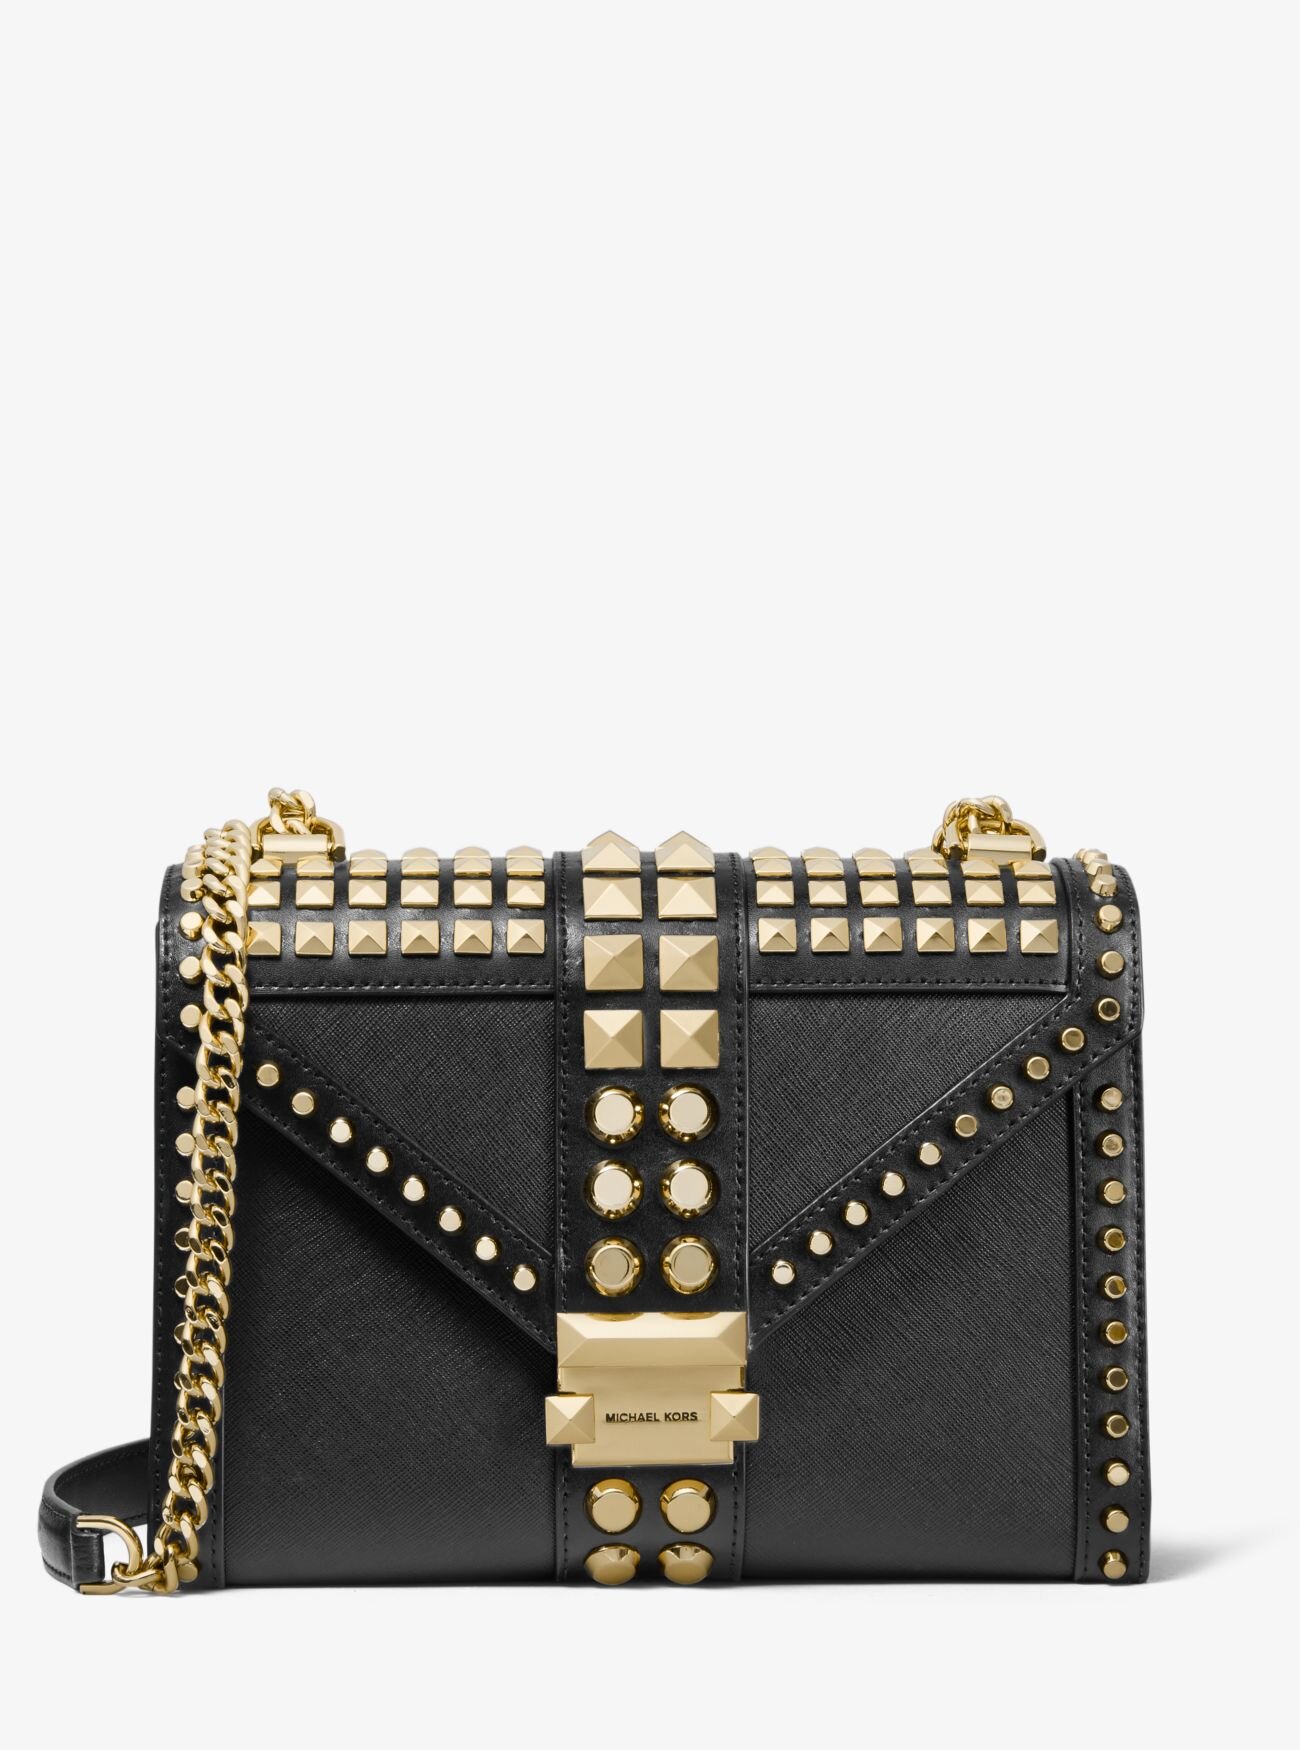 Studded Black Wristlet Clutch Handbag